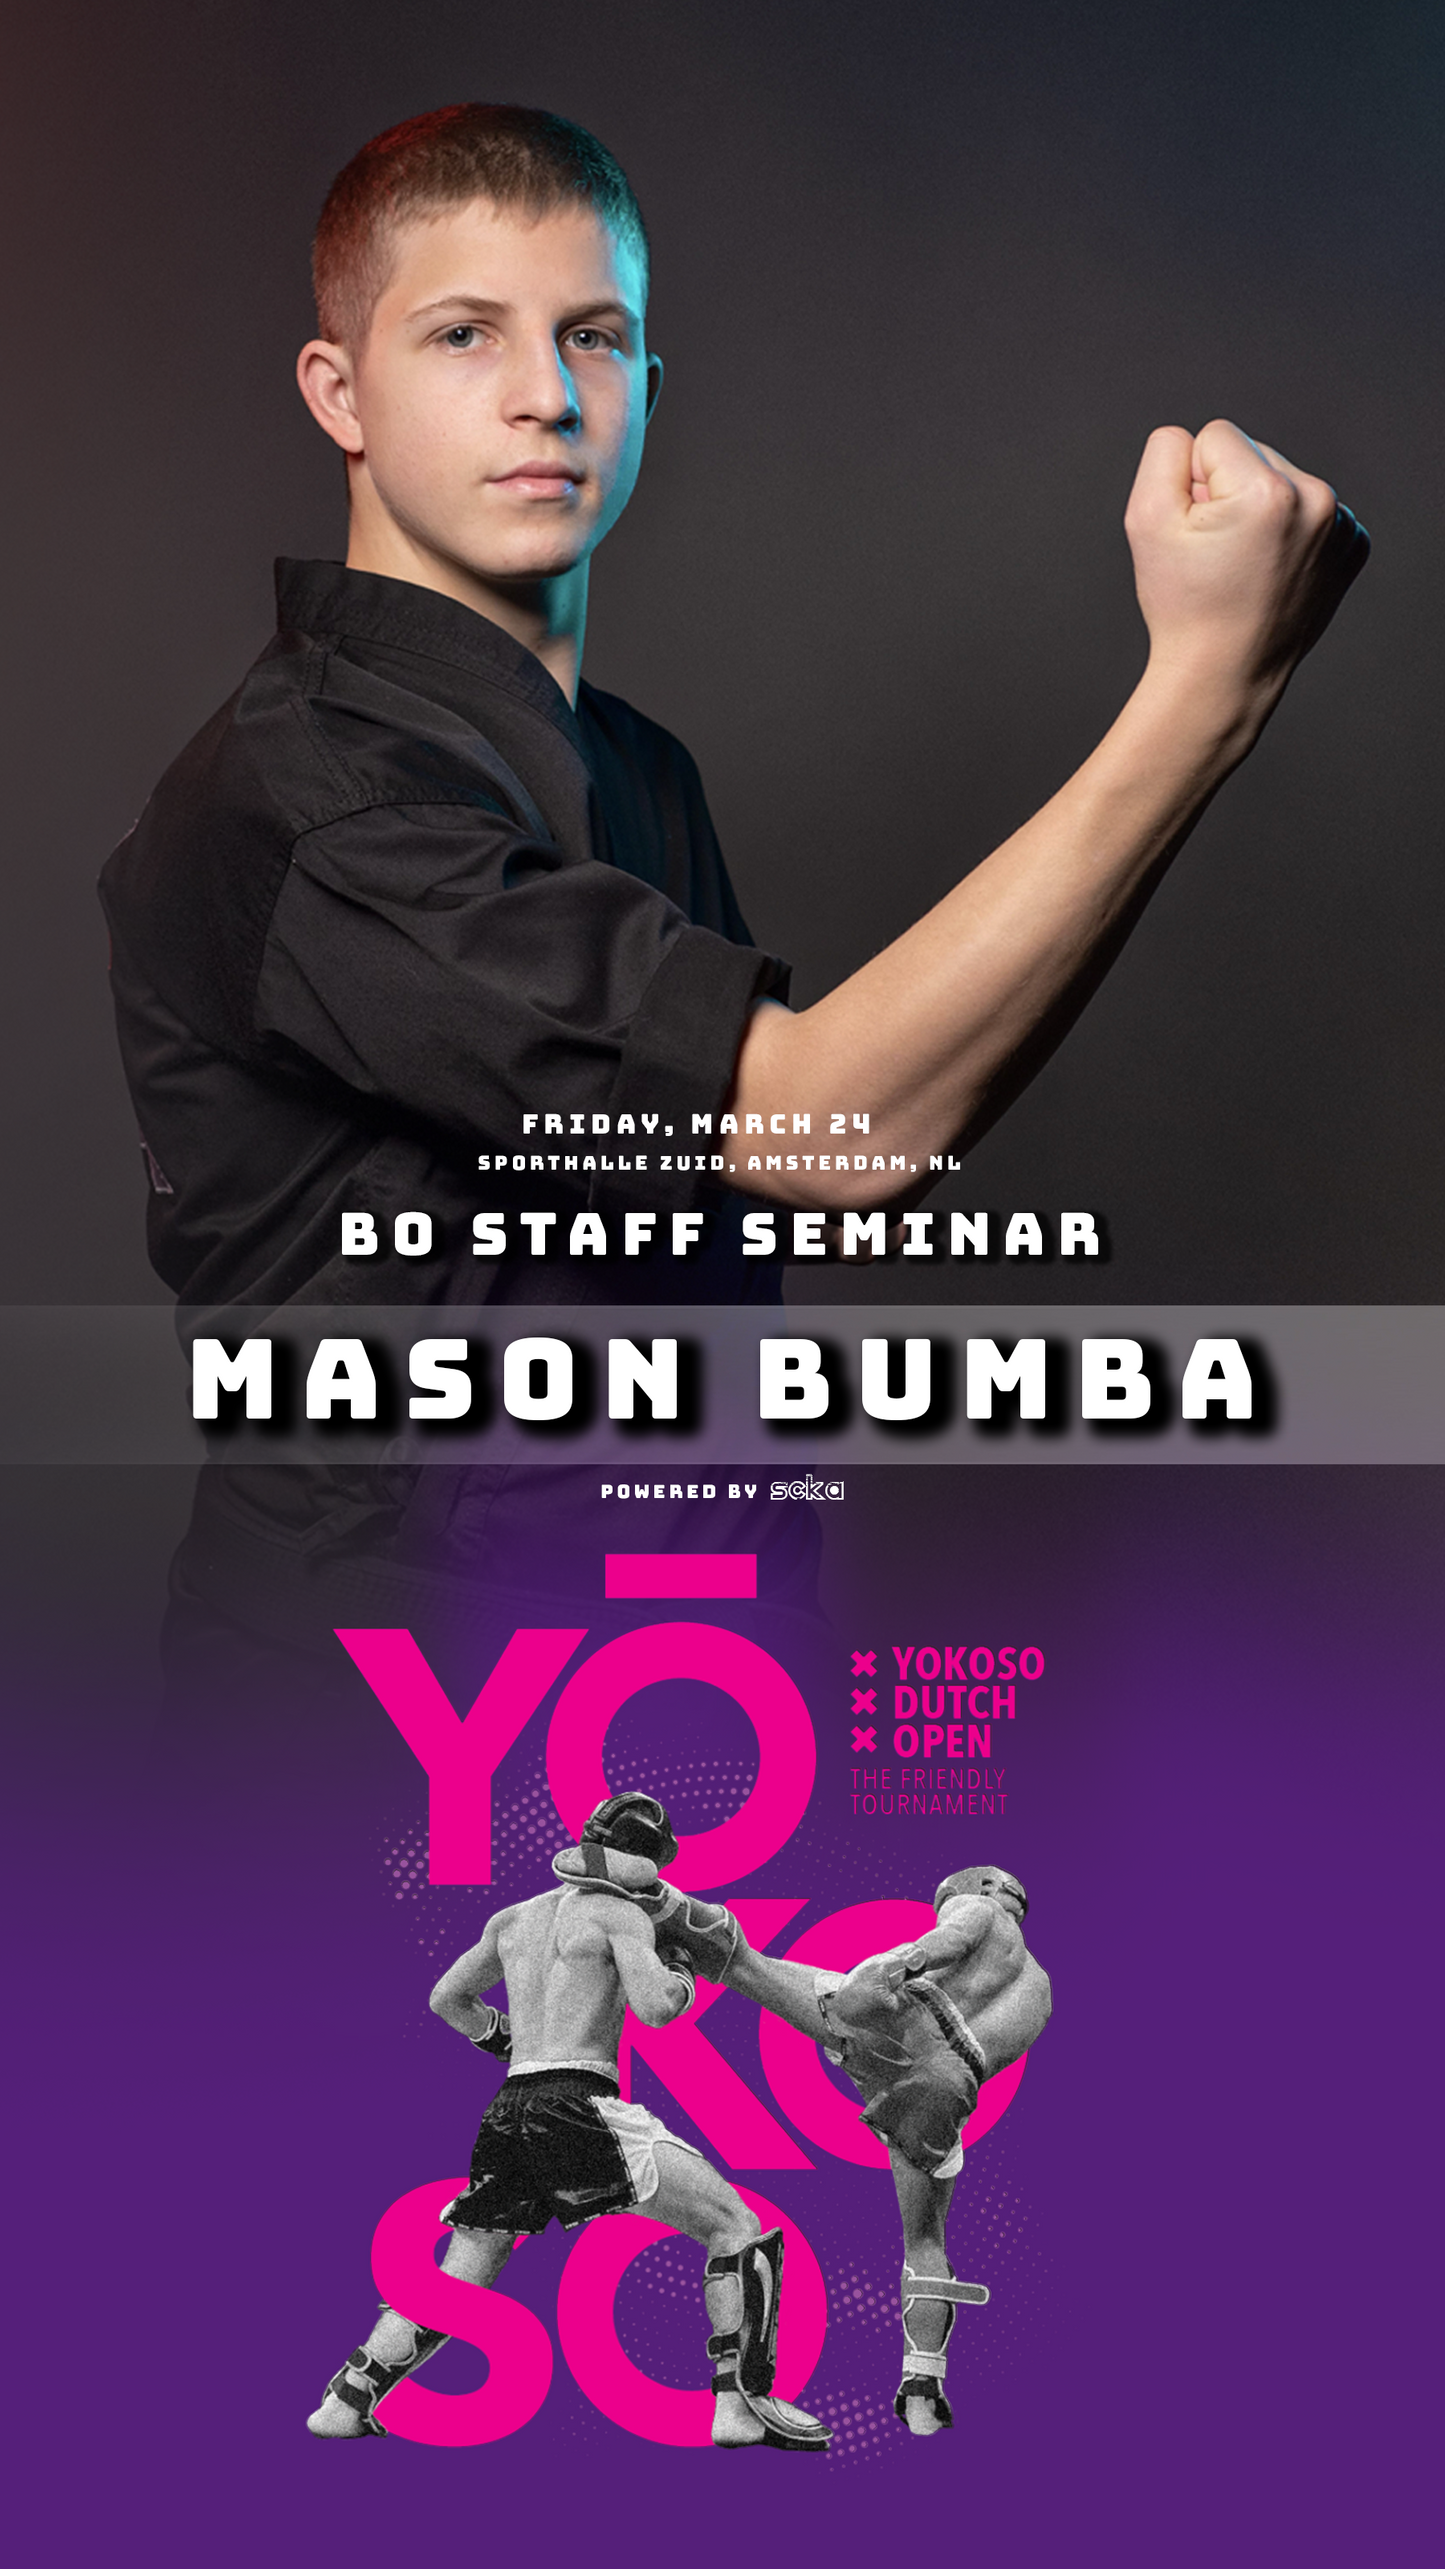 Mason Bumba Bo Staff Seminar @ YDO 2023 - Scka Weapons